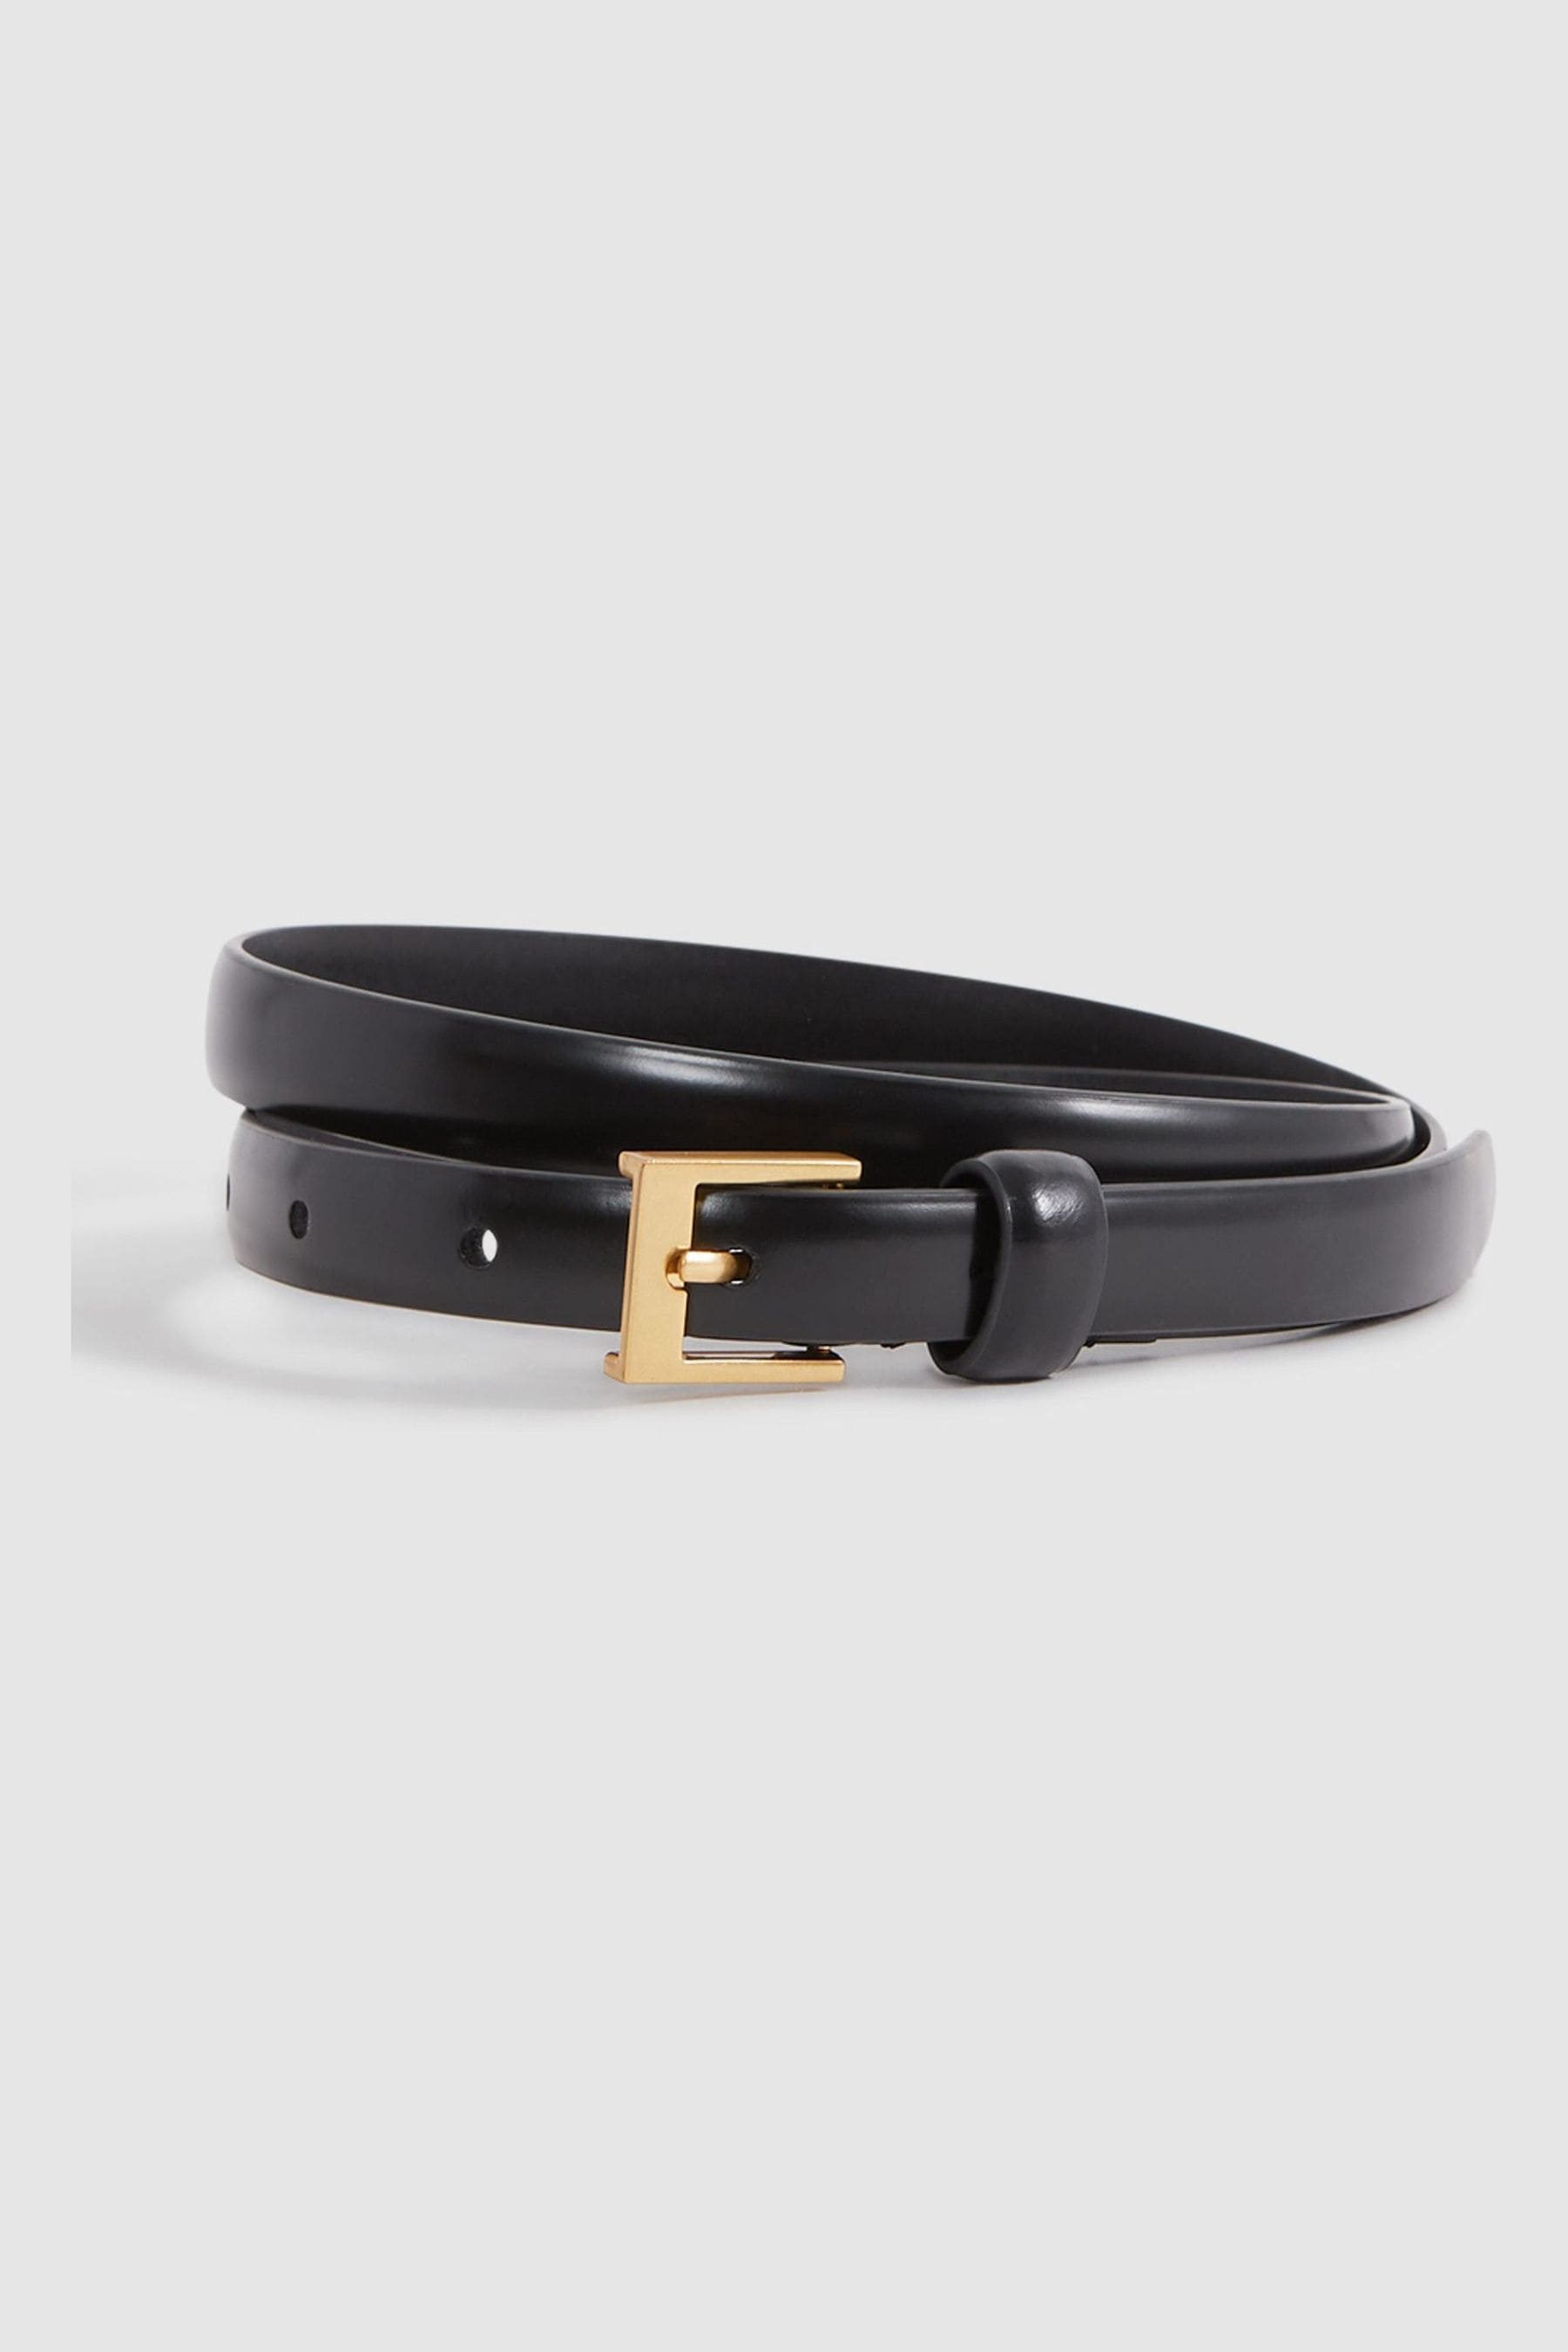 Reiss Holly - Black Thin Leather Belt, L